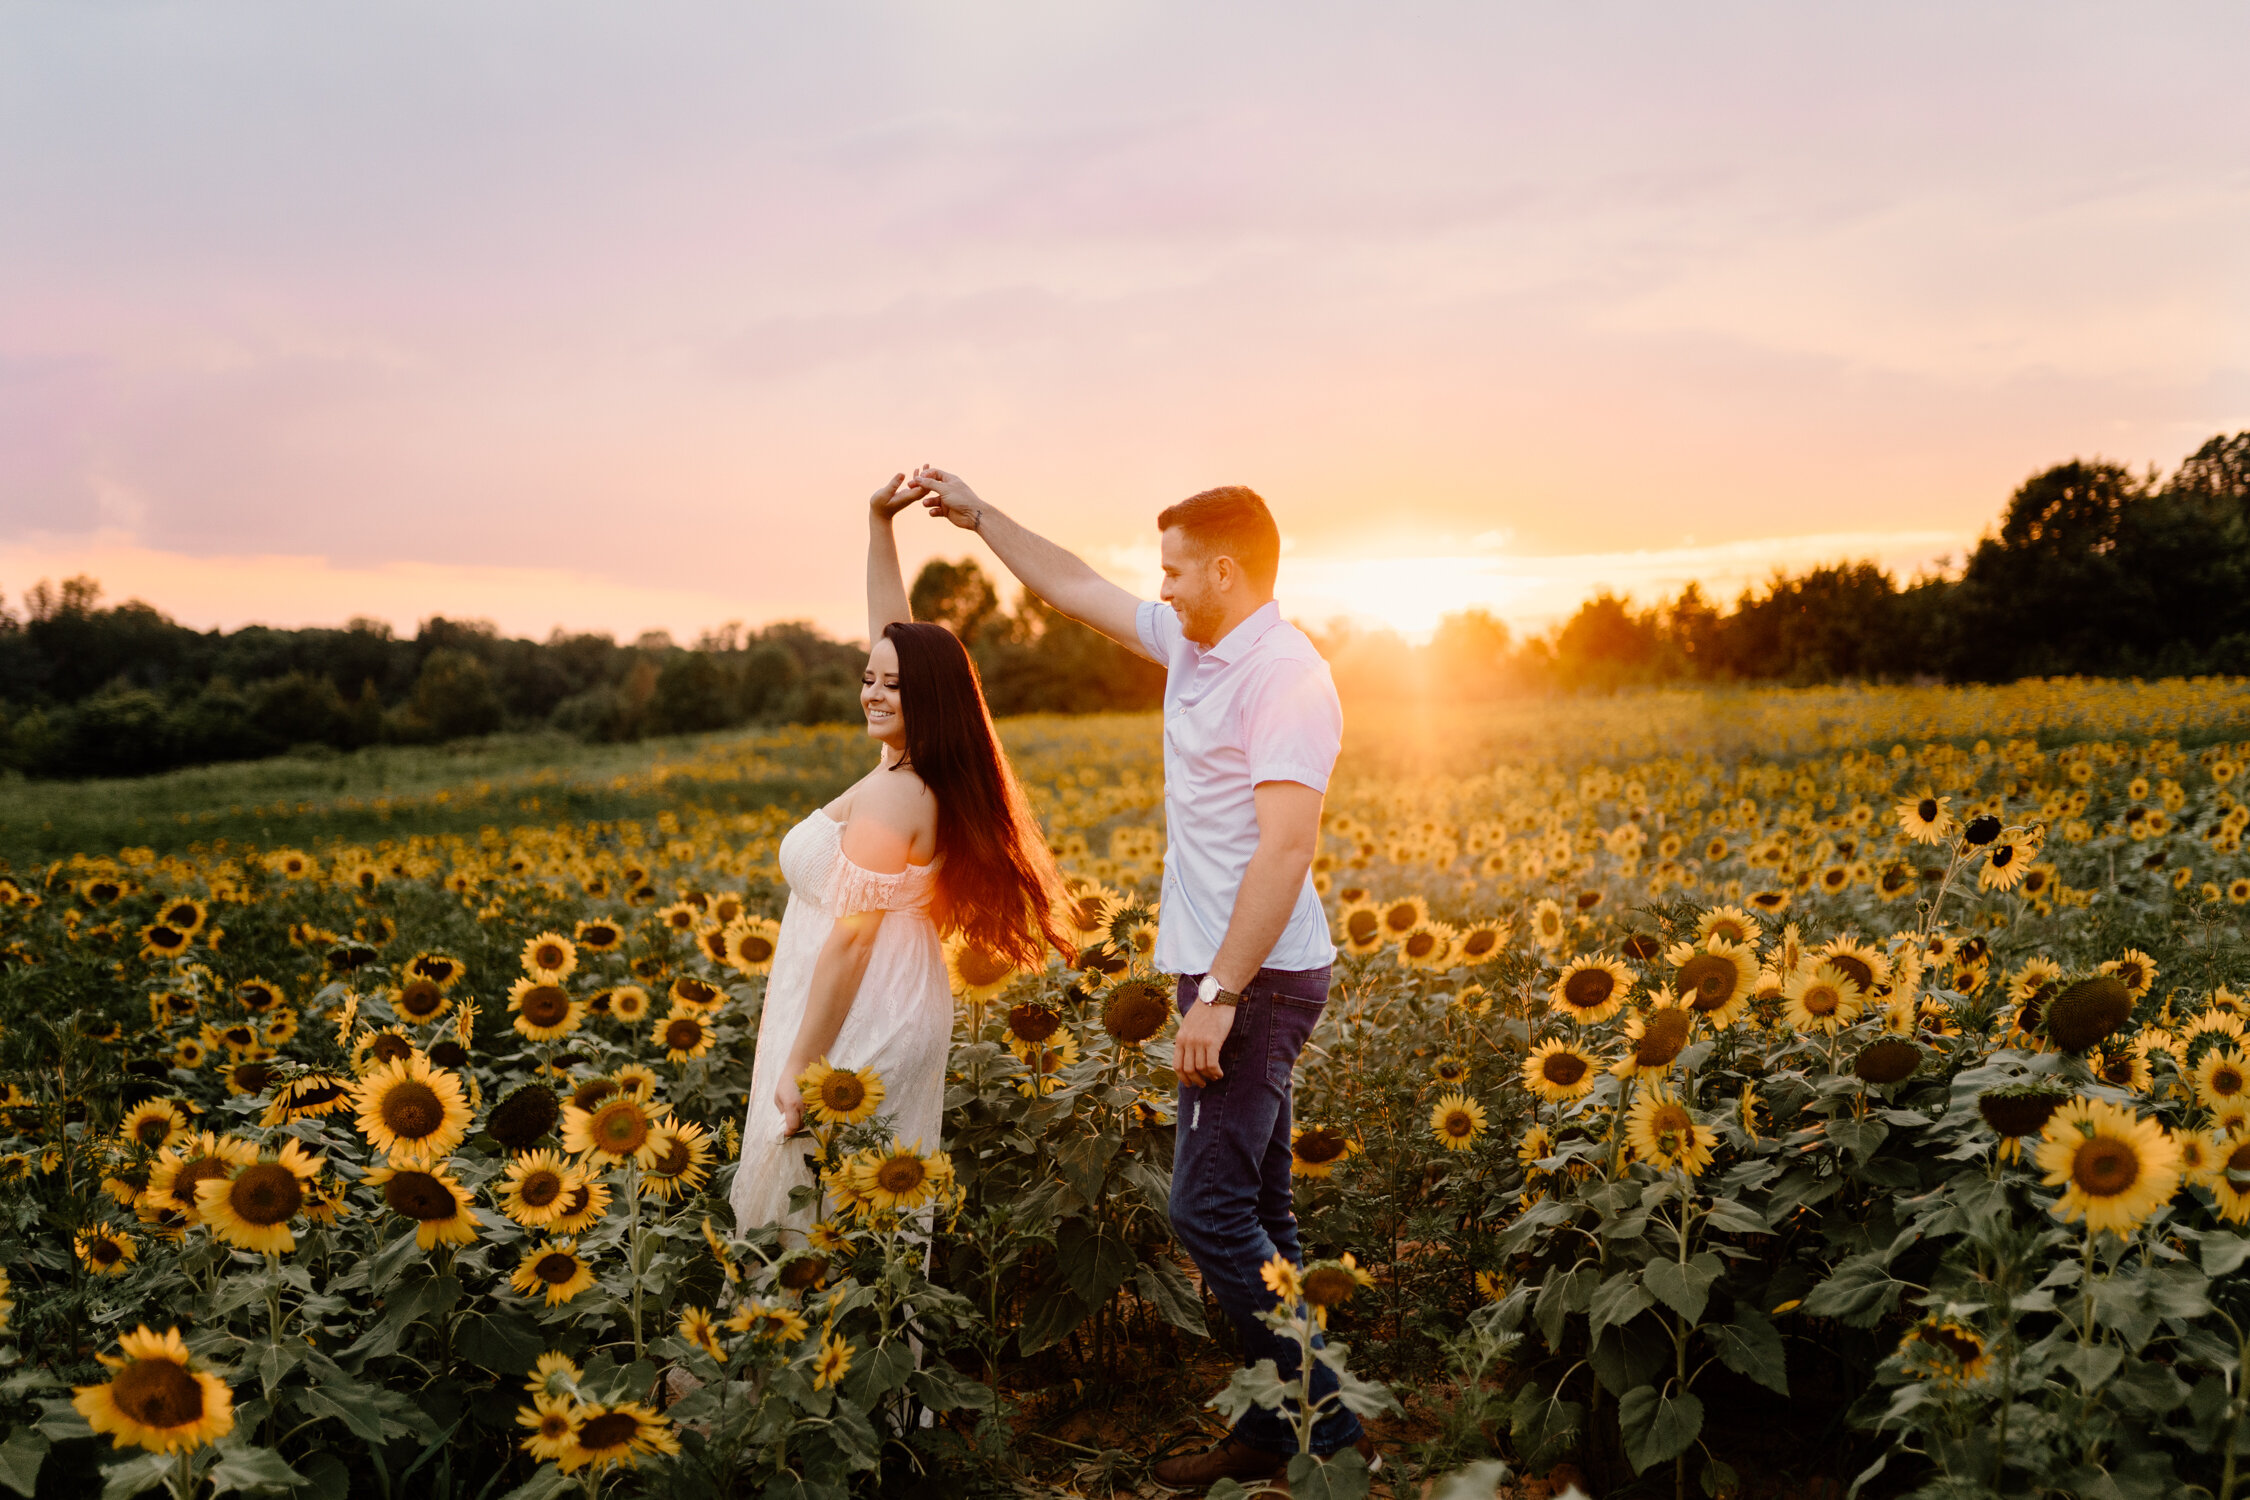 Sunset sunflower engagement session in Winston-Salem, NC  | Triad, North Carolina based Wedding & Elopement Photographer